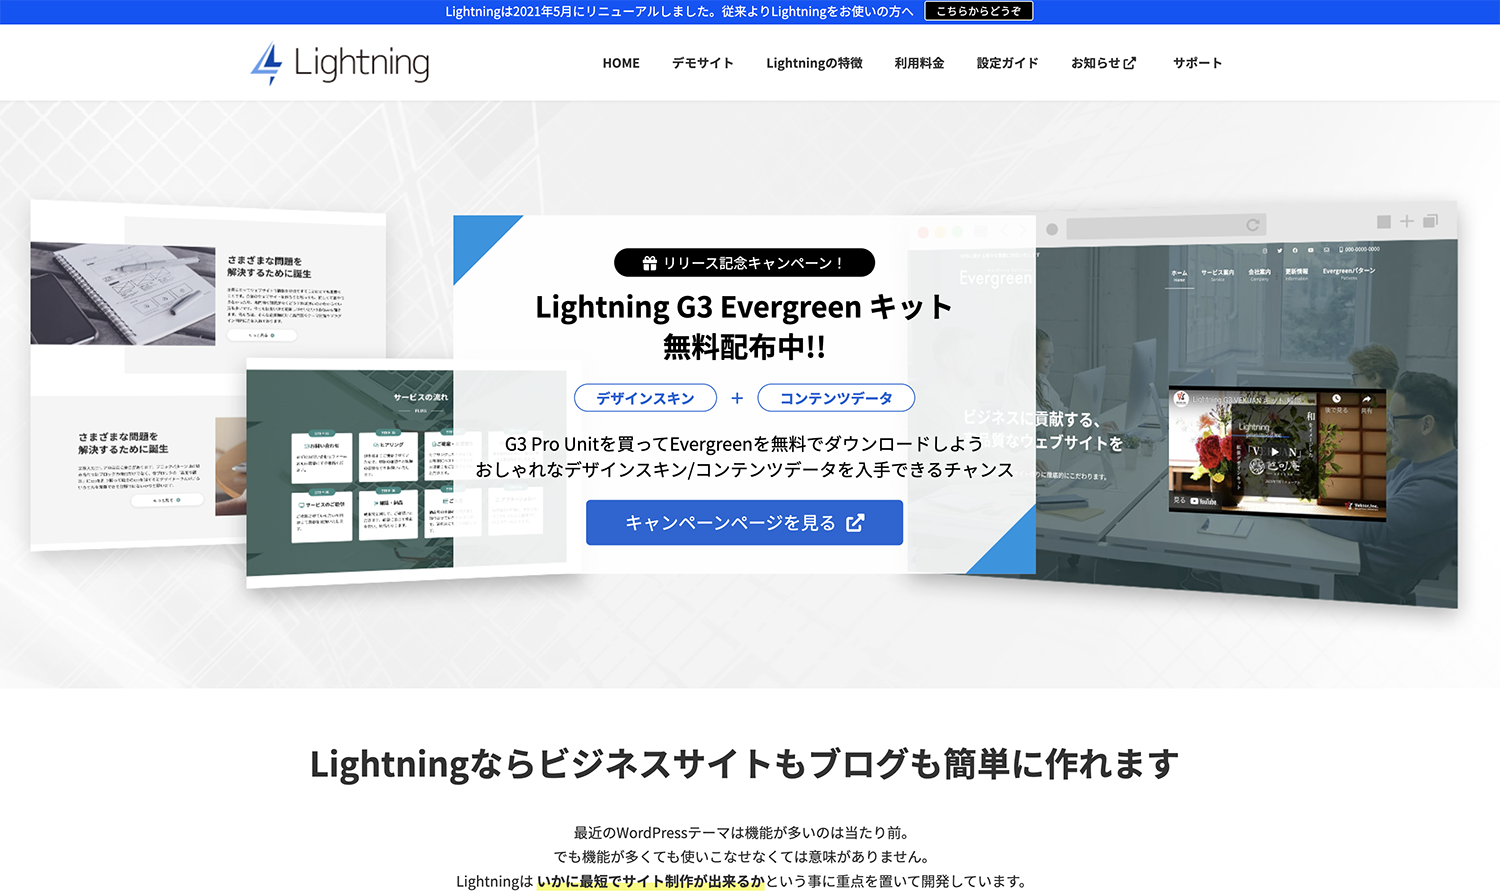 Lightning G3(第3世代)の公式サイト